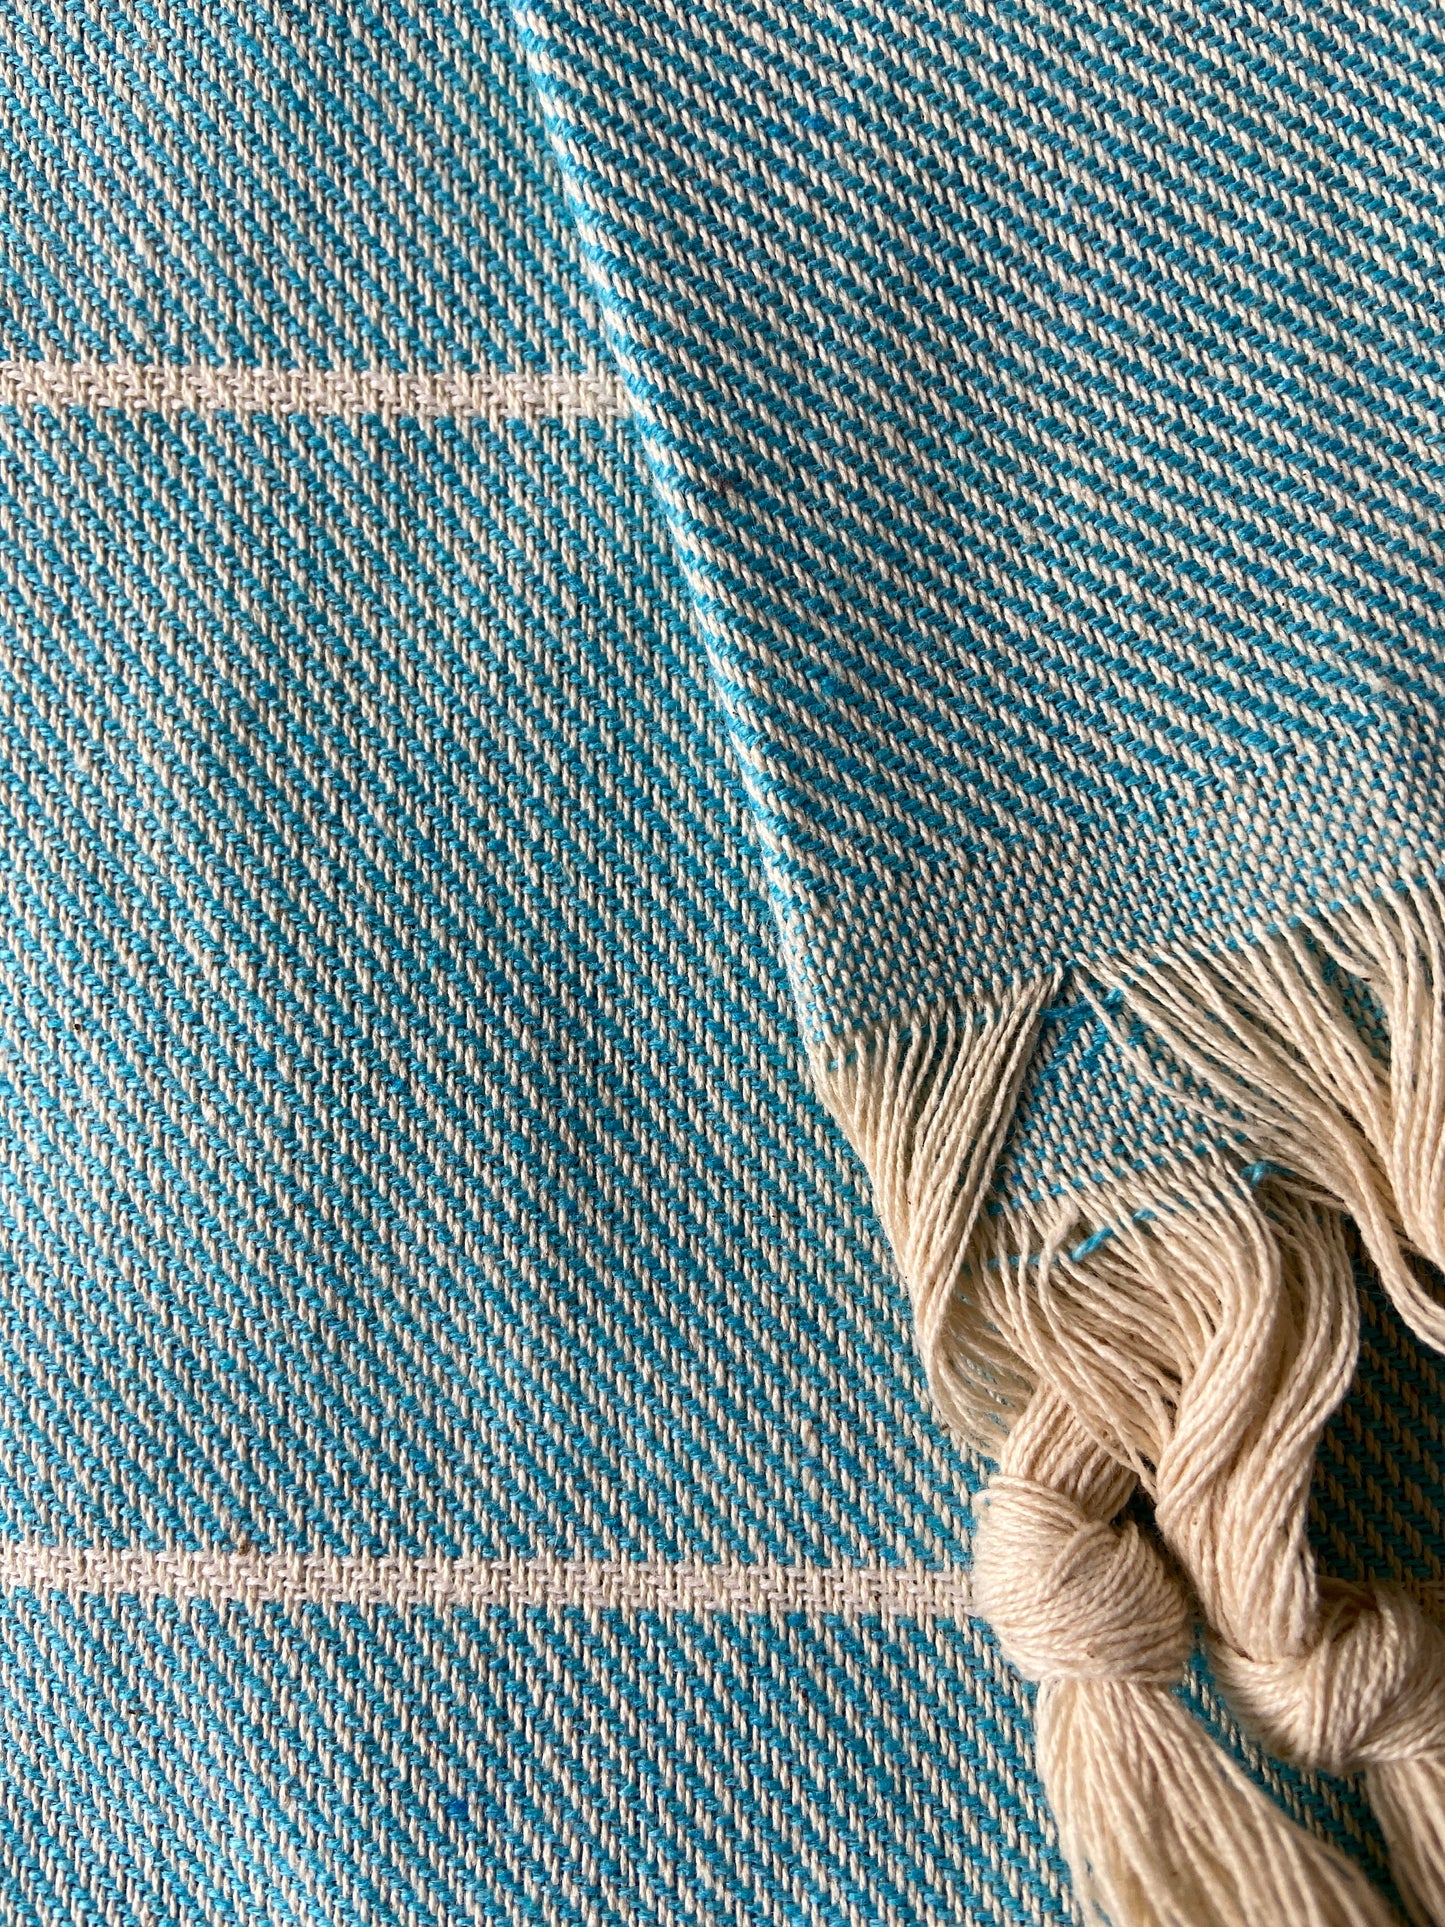 Striped Design Tea Towel - Turquoise Kitchen Towel - Bathroom Hand Towel - Cotton Towel